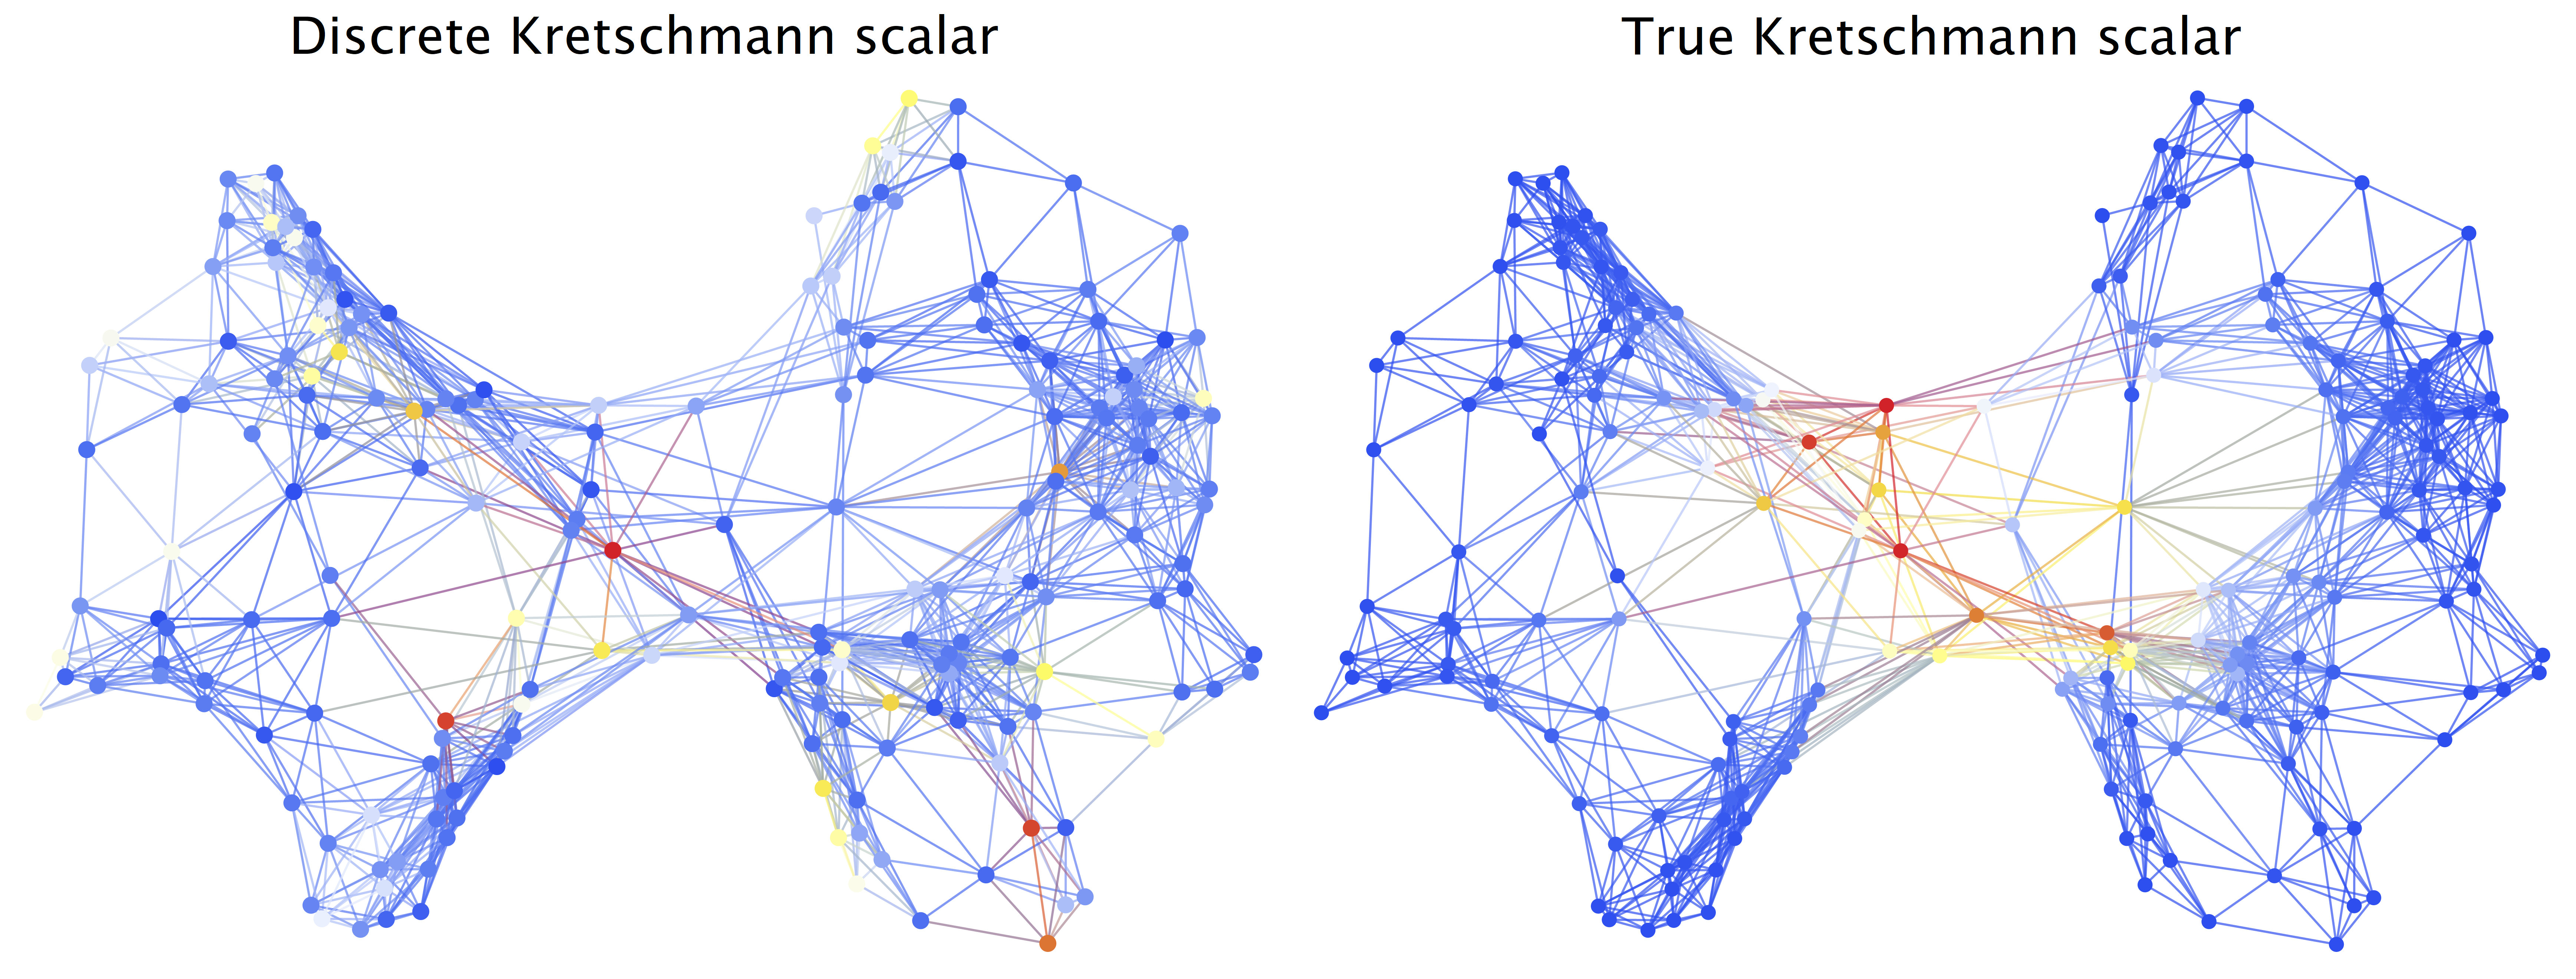 Comparison of discrete Kretschmann scalar (left) and the real Kretschmann scalar (right)